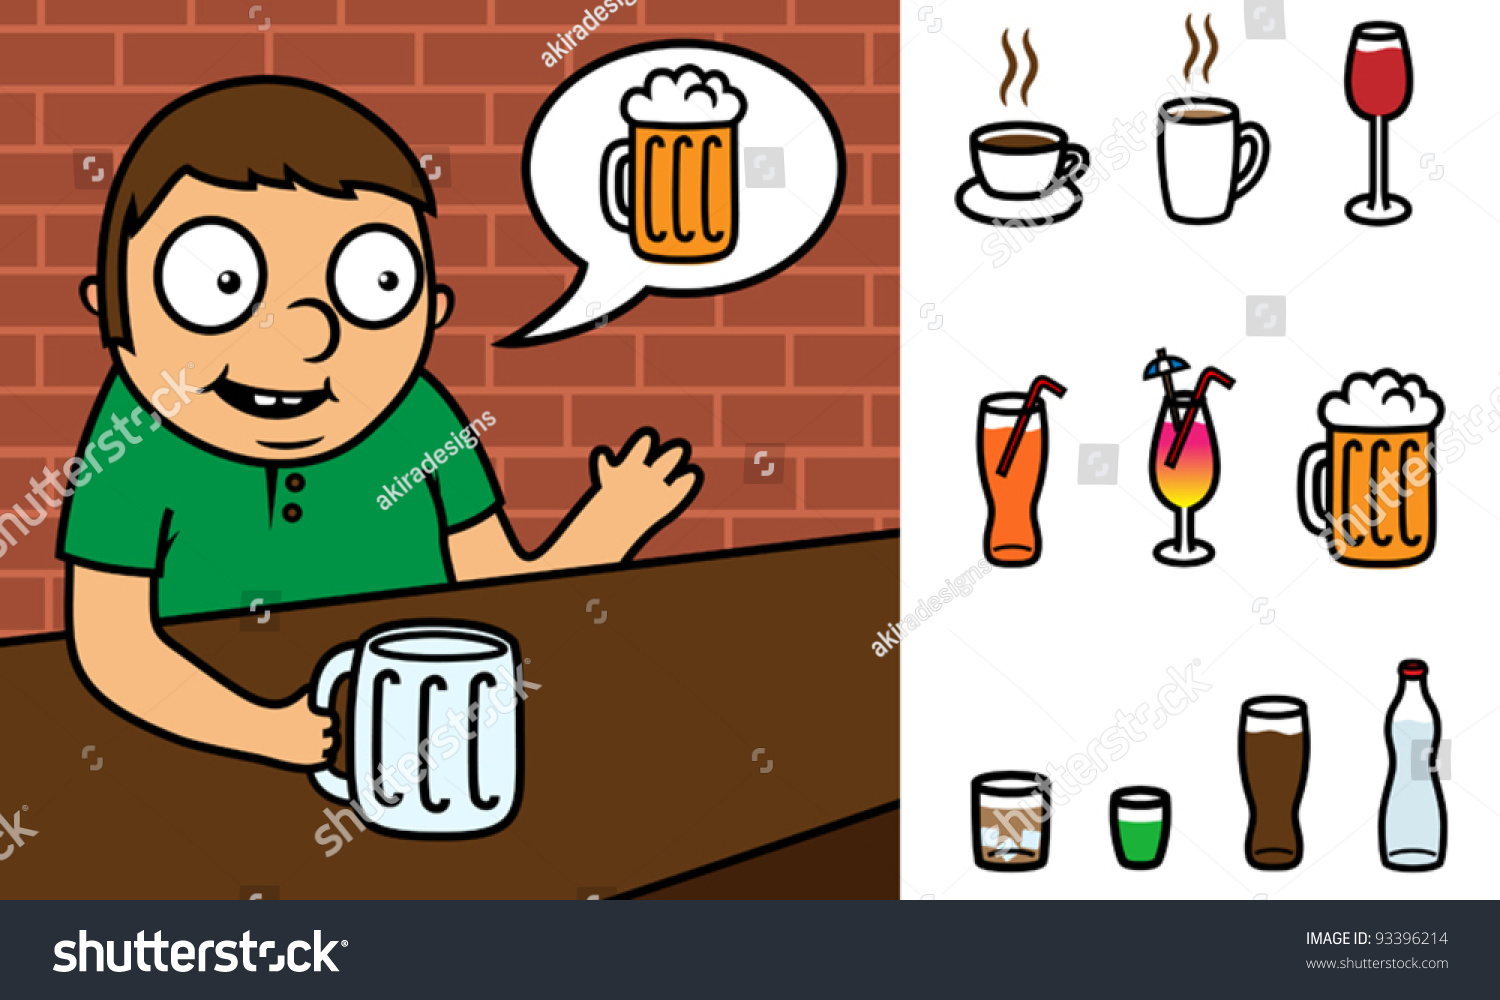 Ordering Drink cartoon at Bar.